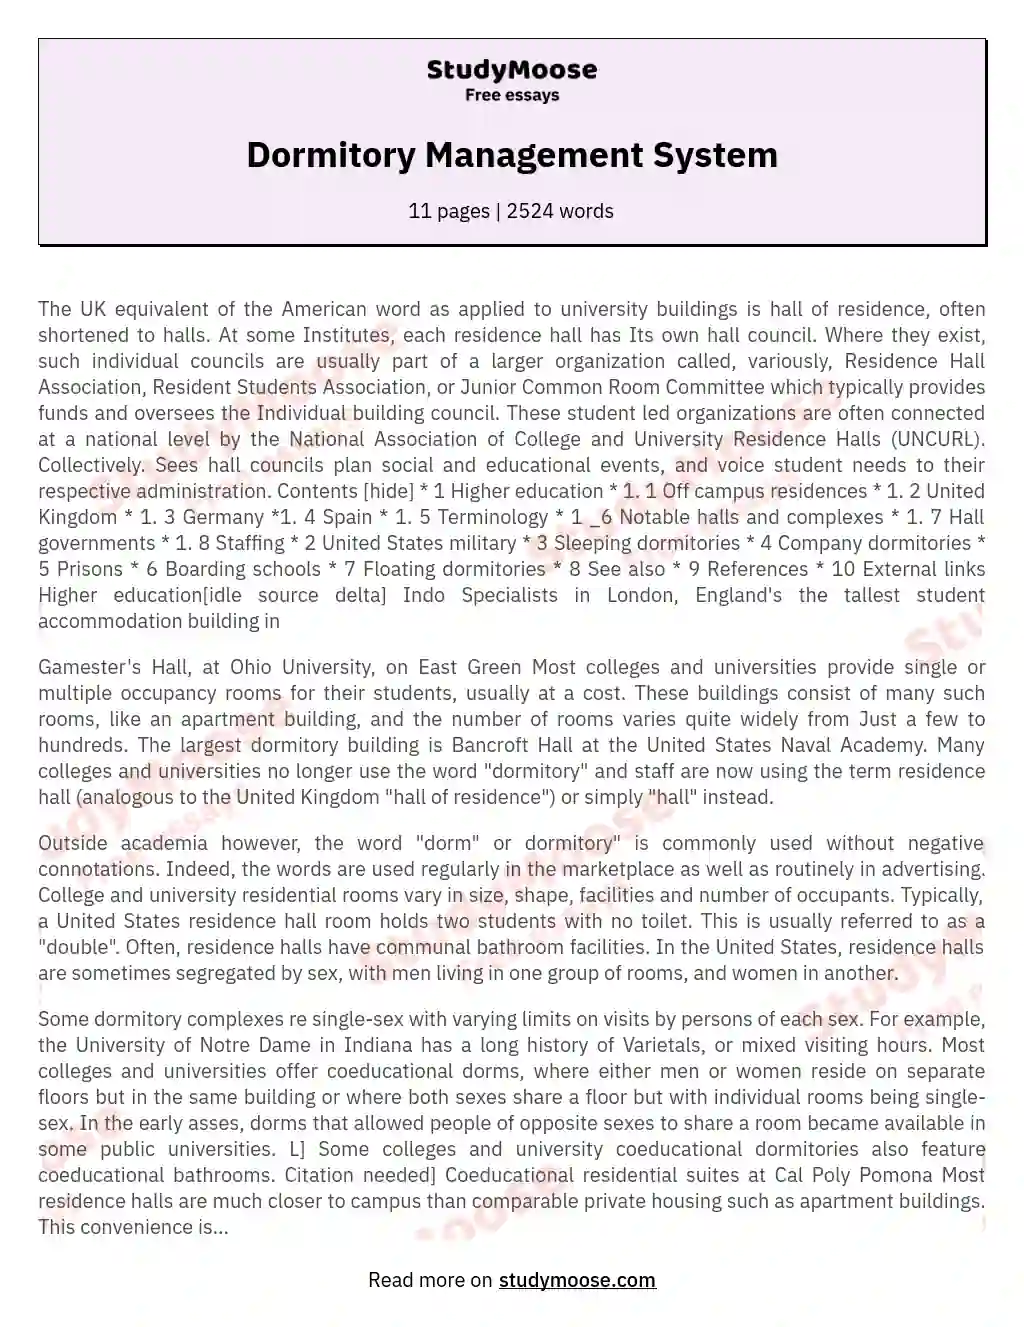 Dormitory Management System essay